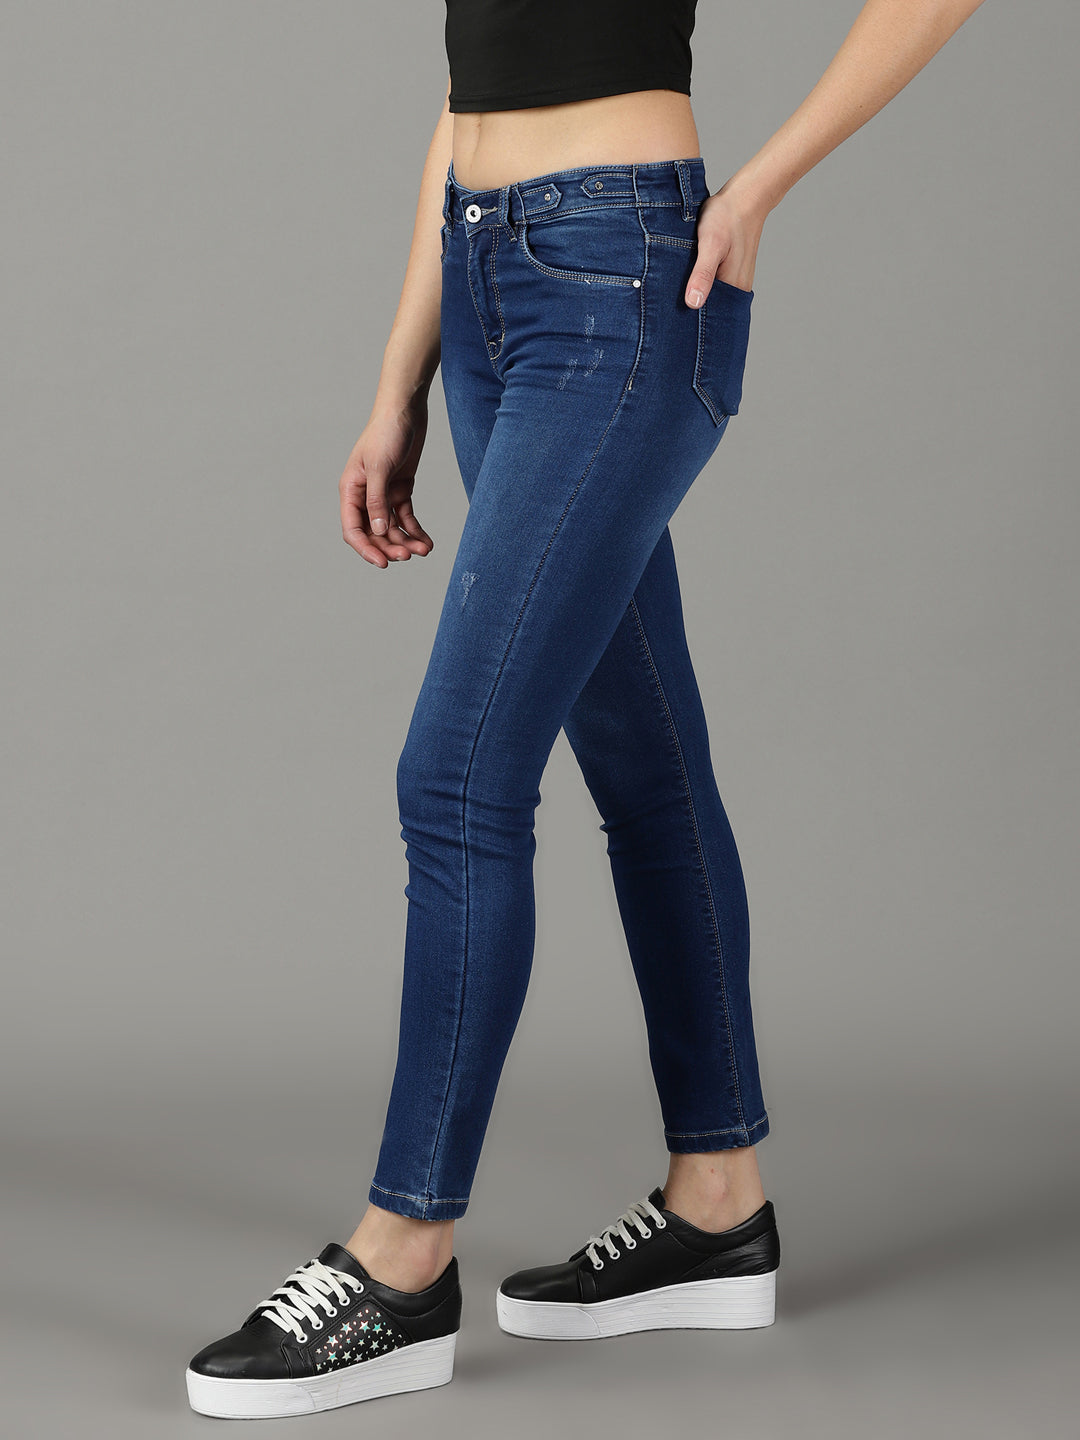 Women's Navy Blue Solid Slim Fit Denim Jeans